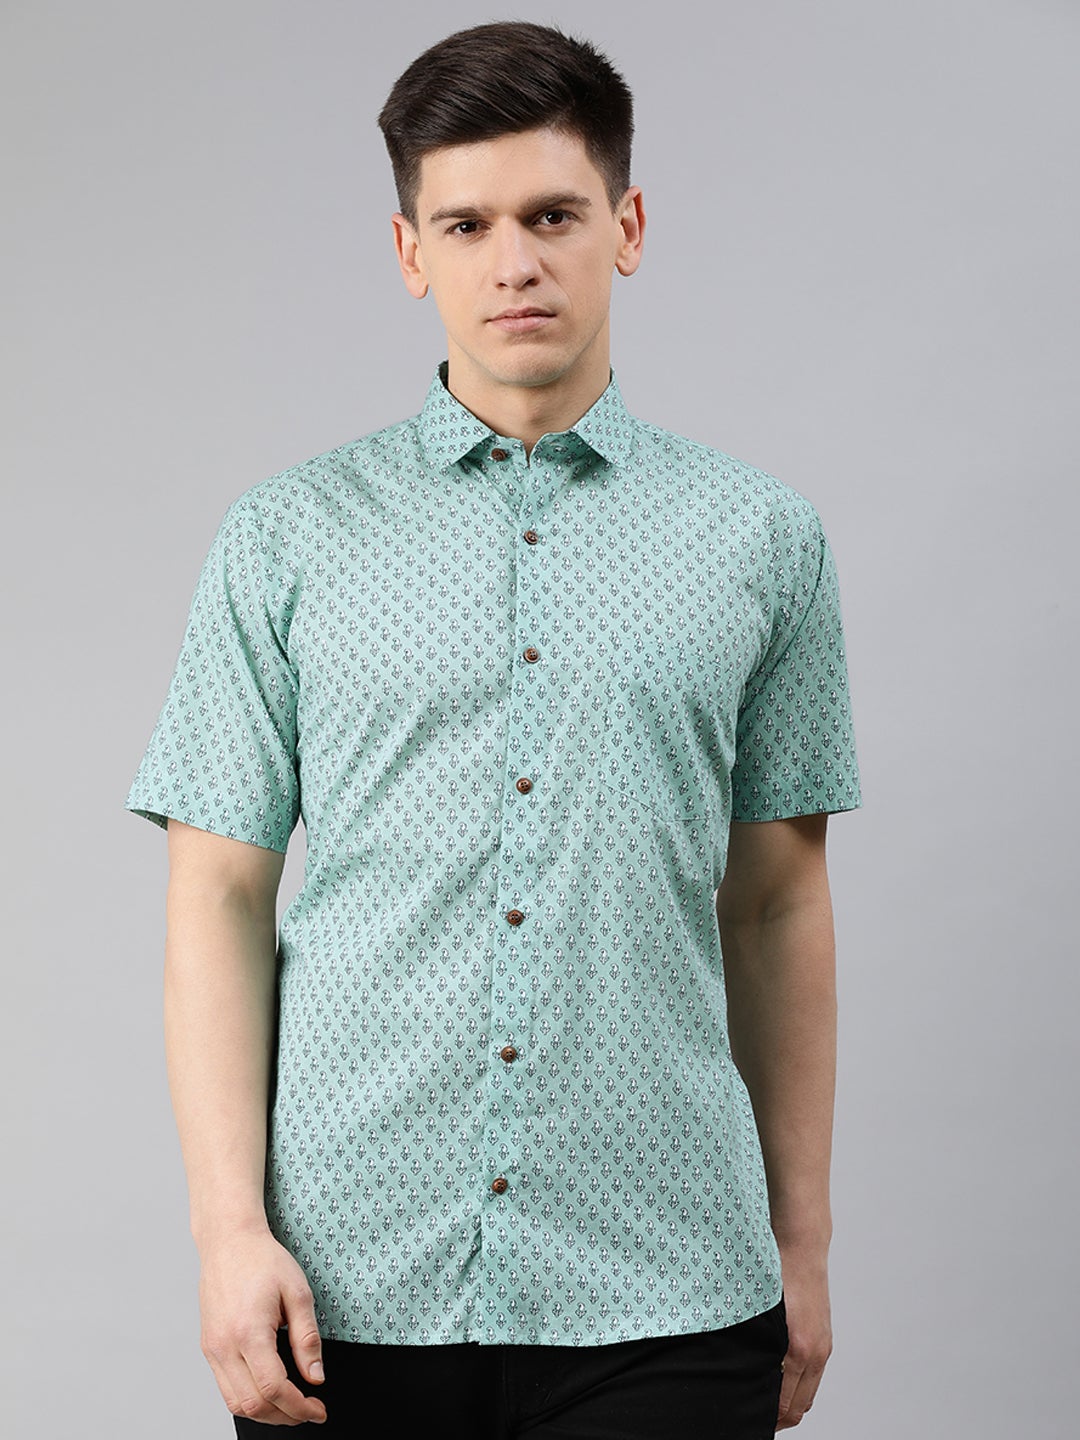 Sea Green Cotton Short Sleeves Shirts For Men-MMH026 - NOZ2TOZ